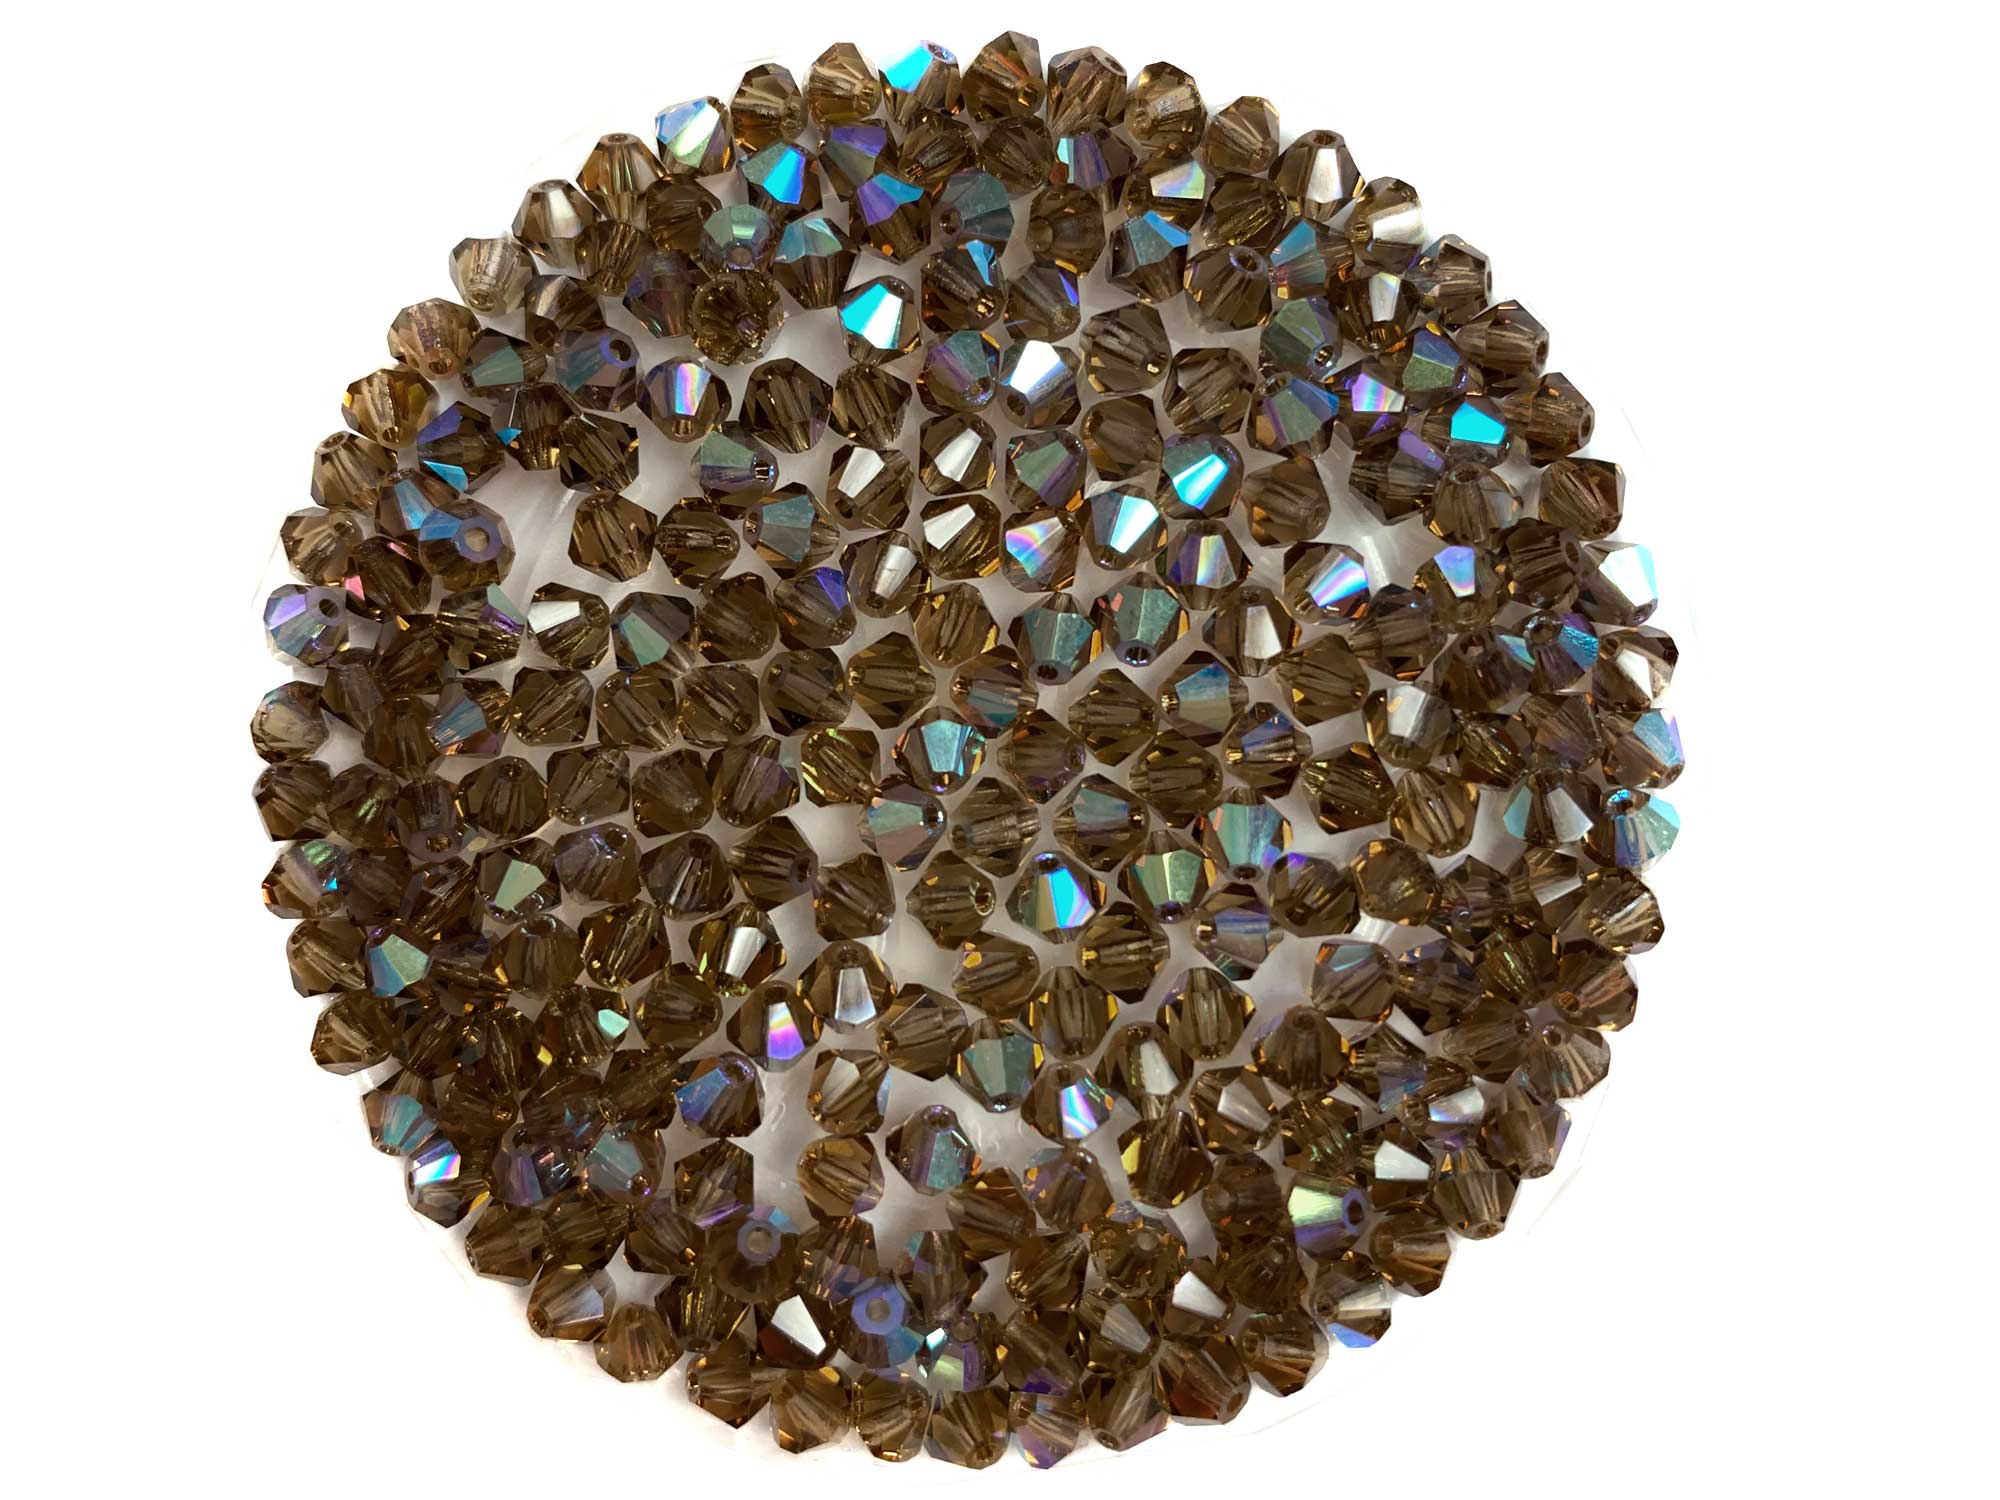 Smoked Topaz AB, Czech Glass Beads, Machine Cut Bicones (MC Rondell, Diamond Shape), dark brown crystals coated with Aurora Borealis, 4mm, 5mm, 8mm